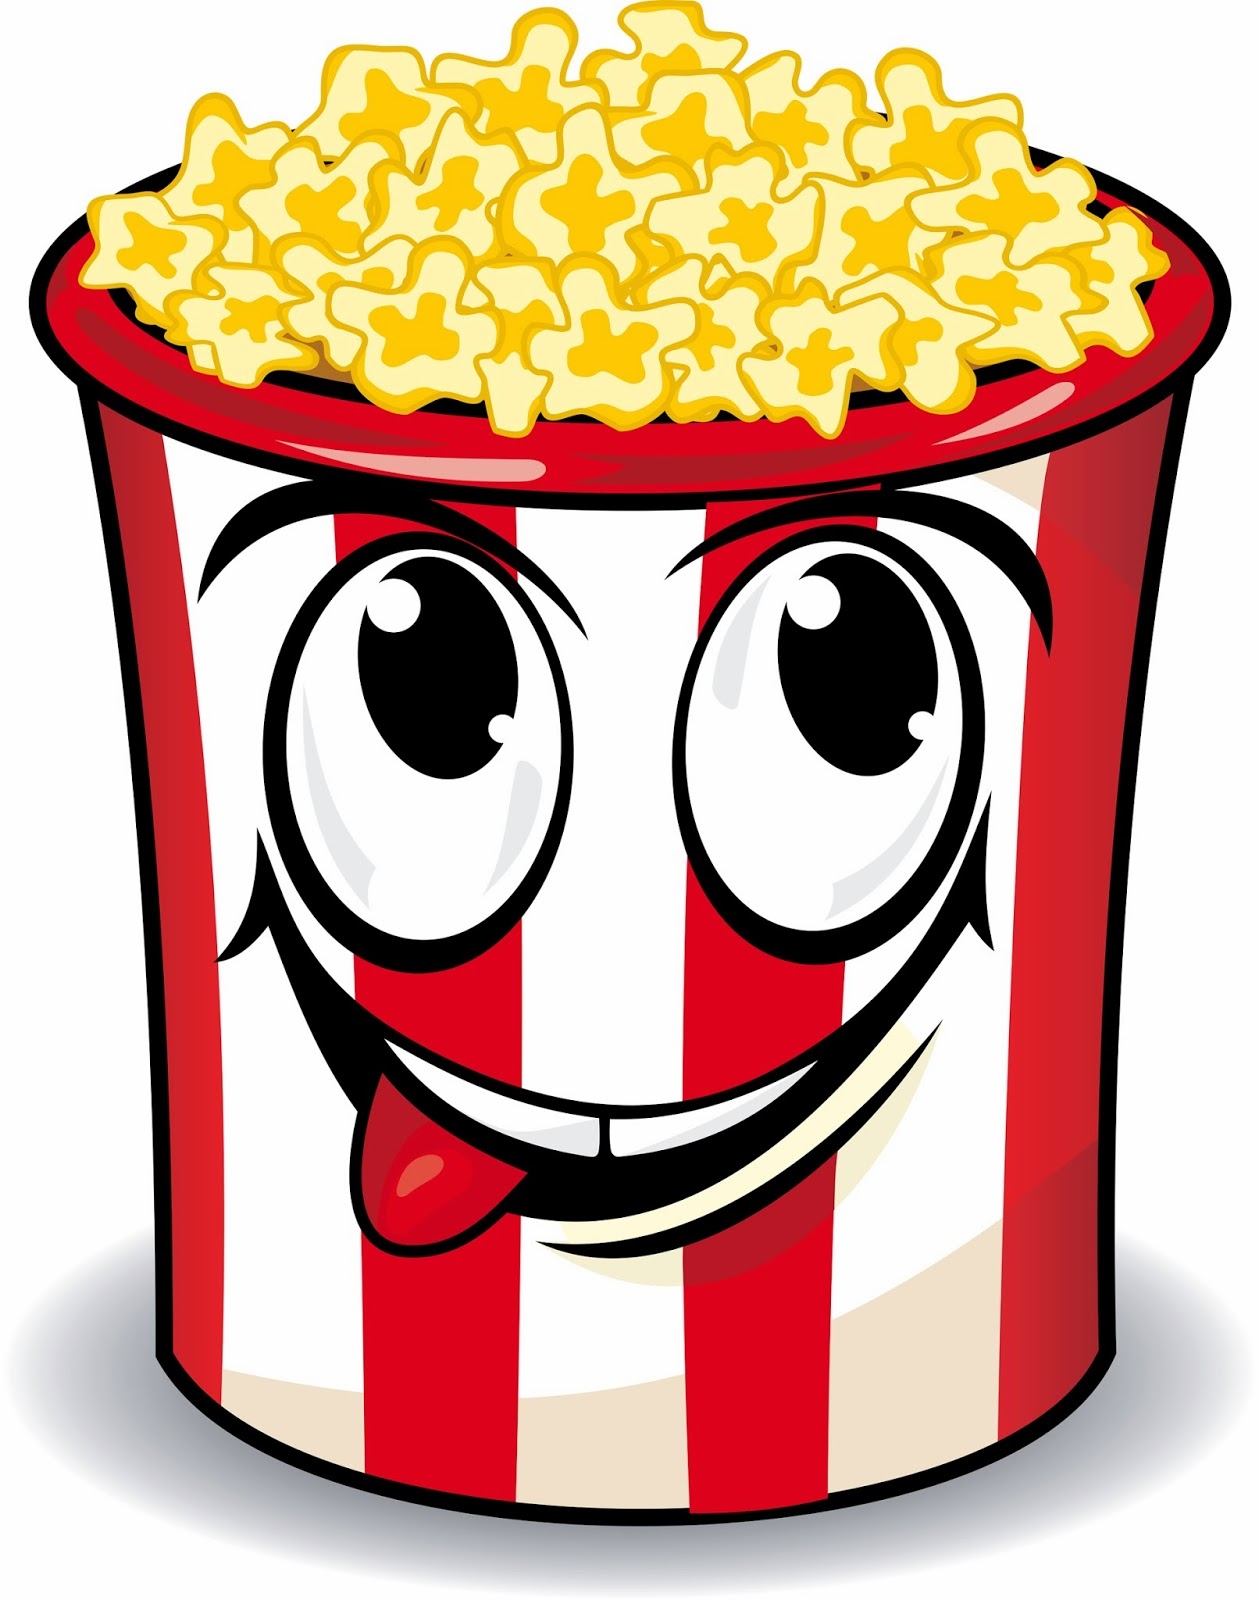 Circus popcorn clip art free 